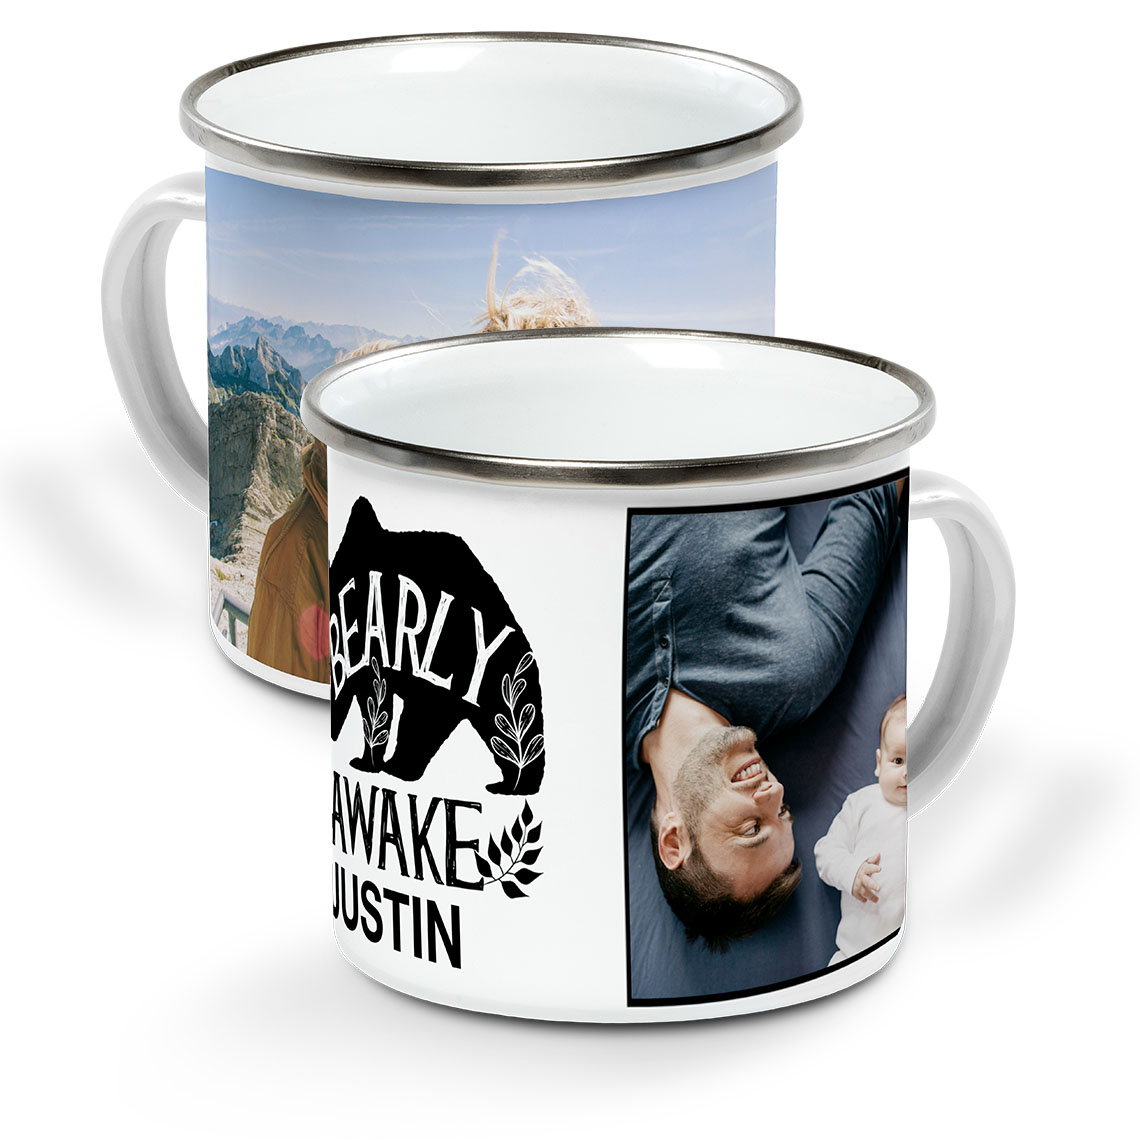 Personalised Childrens Enamel Camping Mug-Kids Cups-Custom Made Mug-Personalised